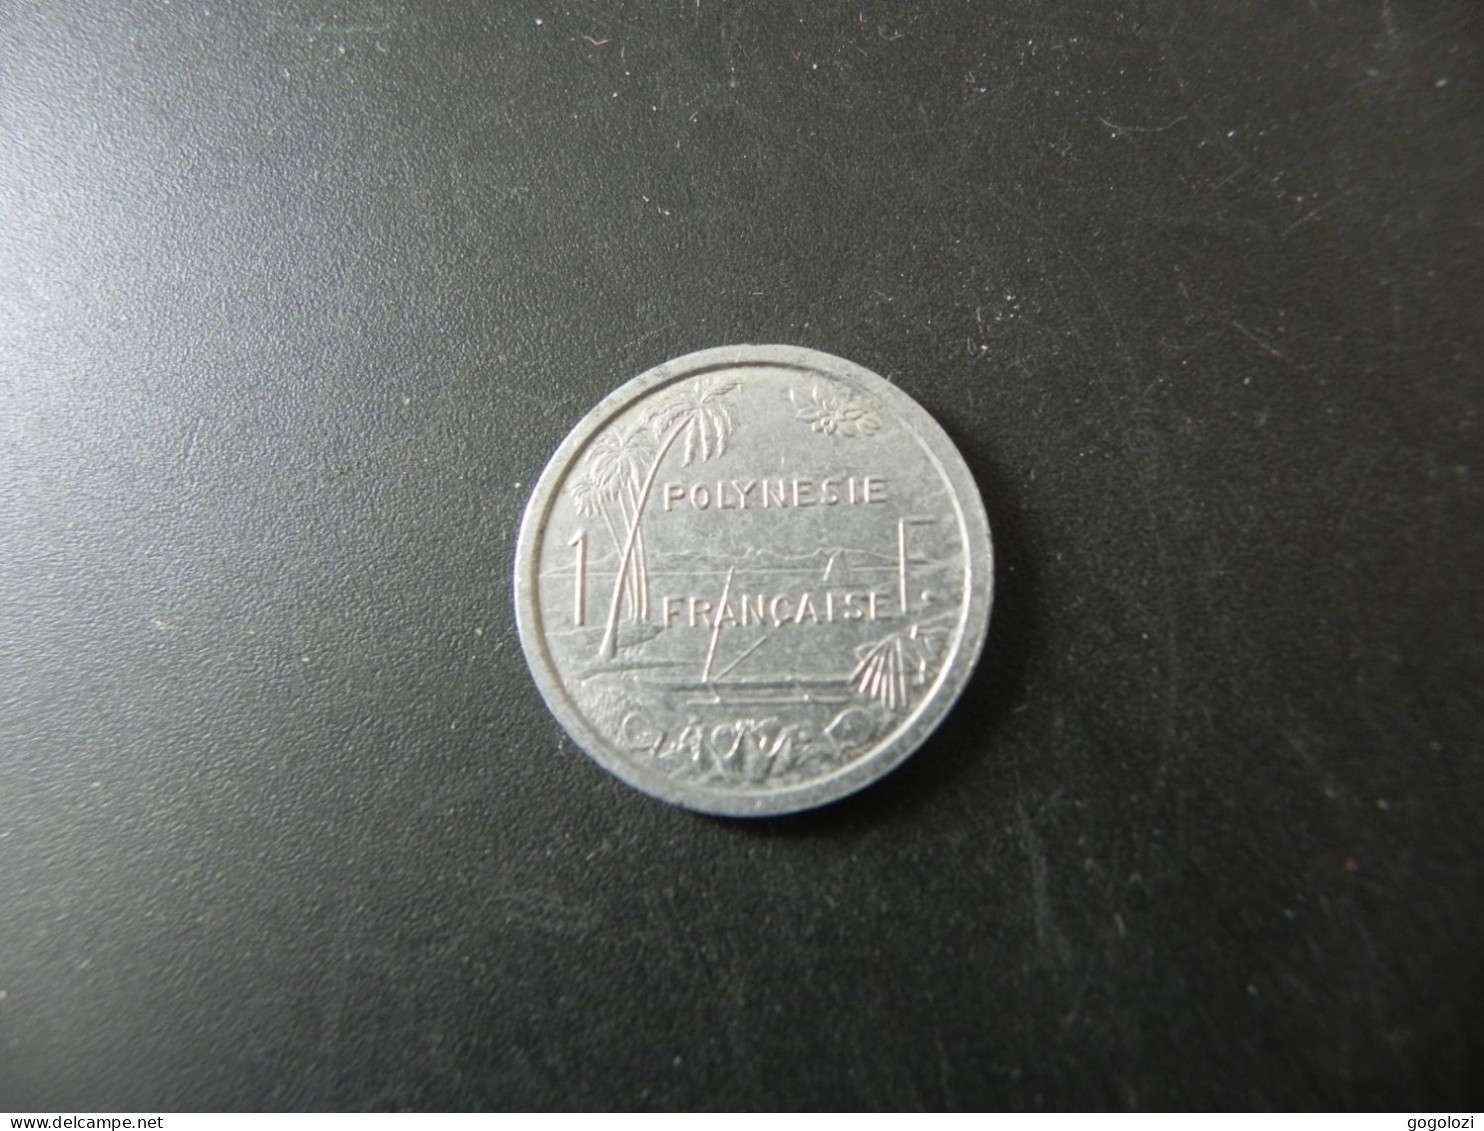 Polynesie Française 1 Franc 1987 - Polynésie Française